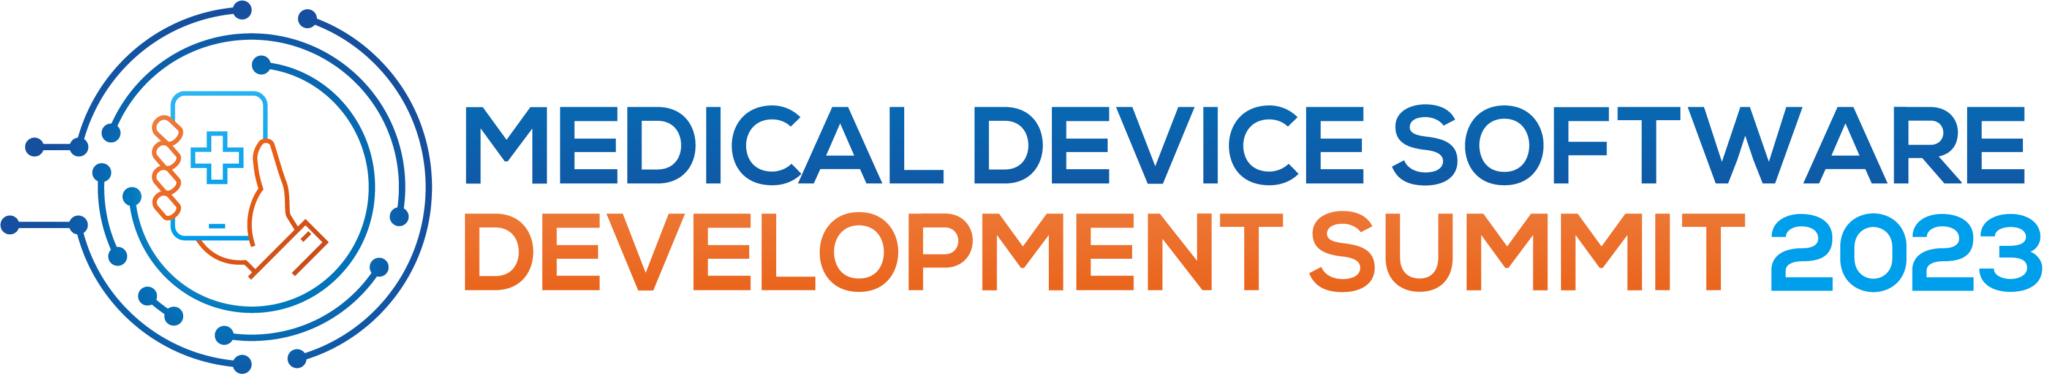 HW221104-3rd-Medical-Device-Software-Development-Summit-logo-2048x374